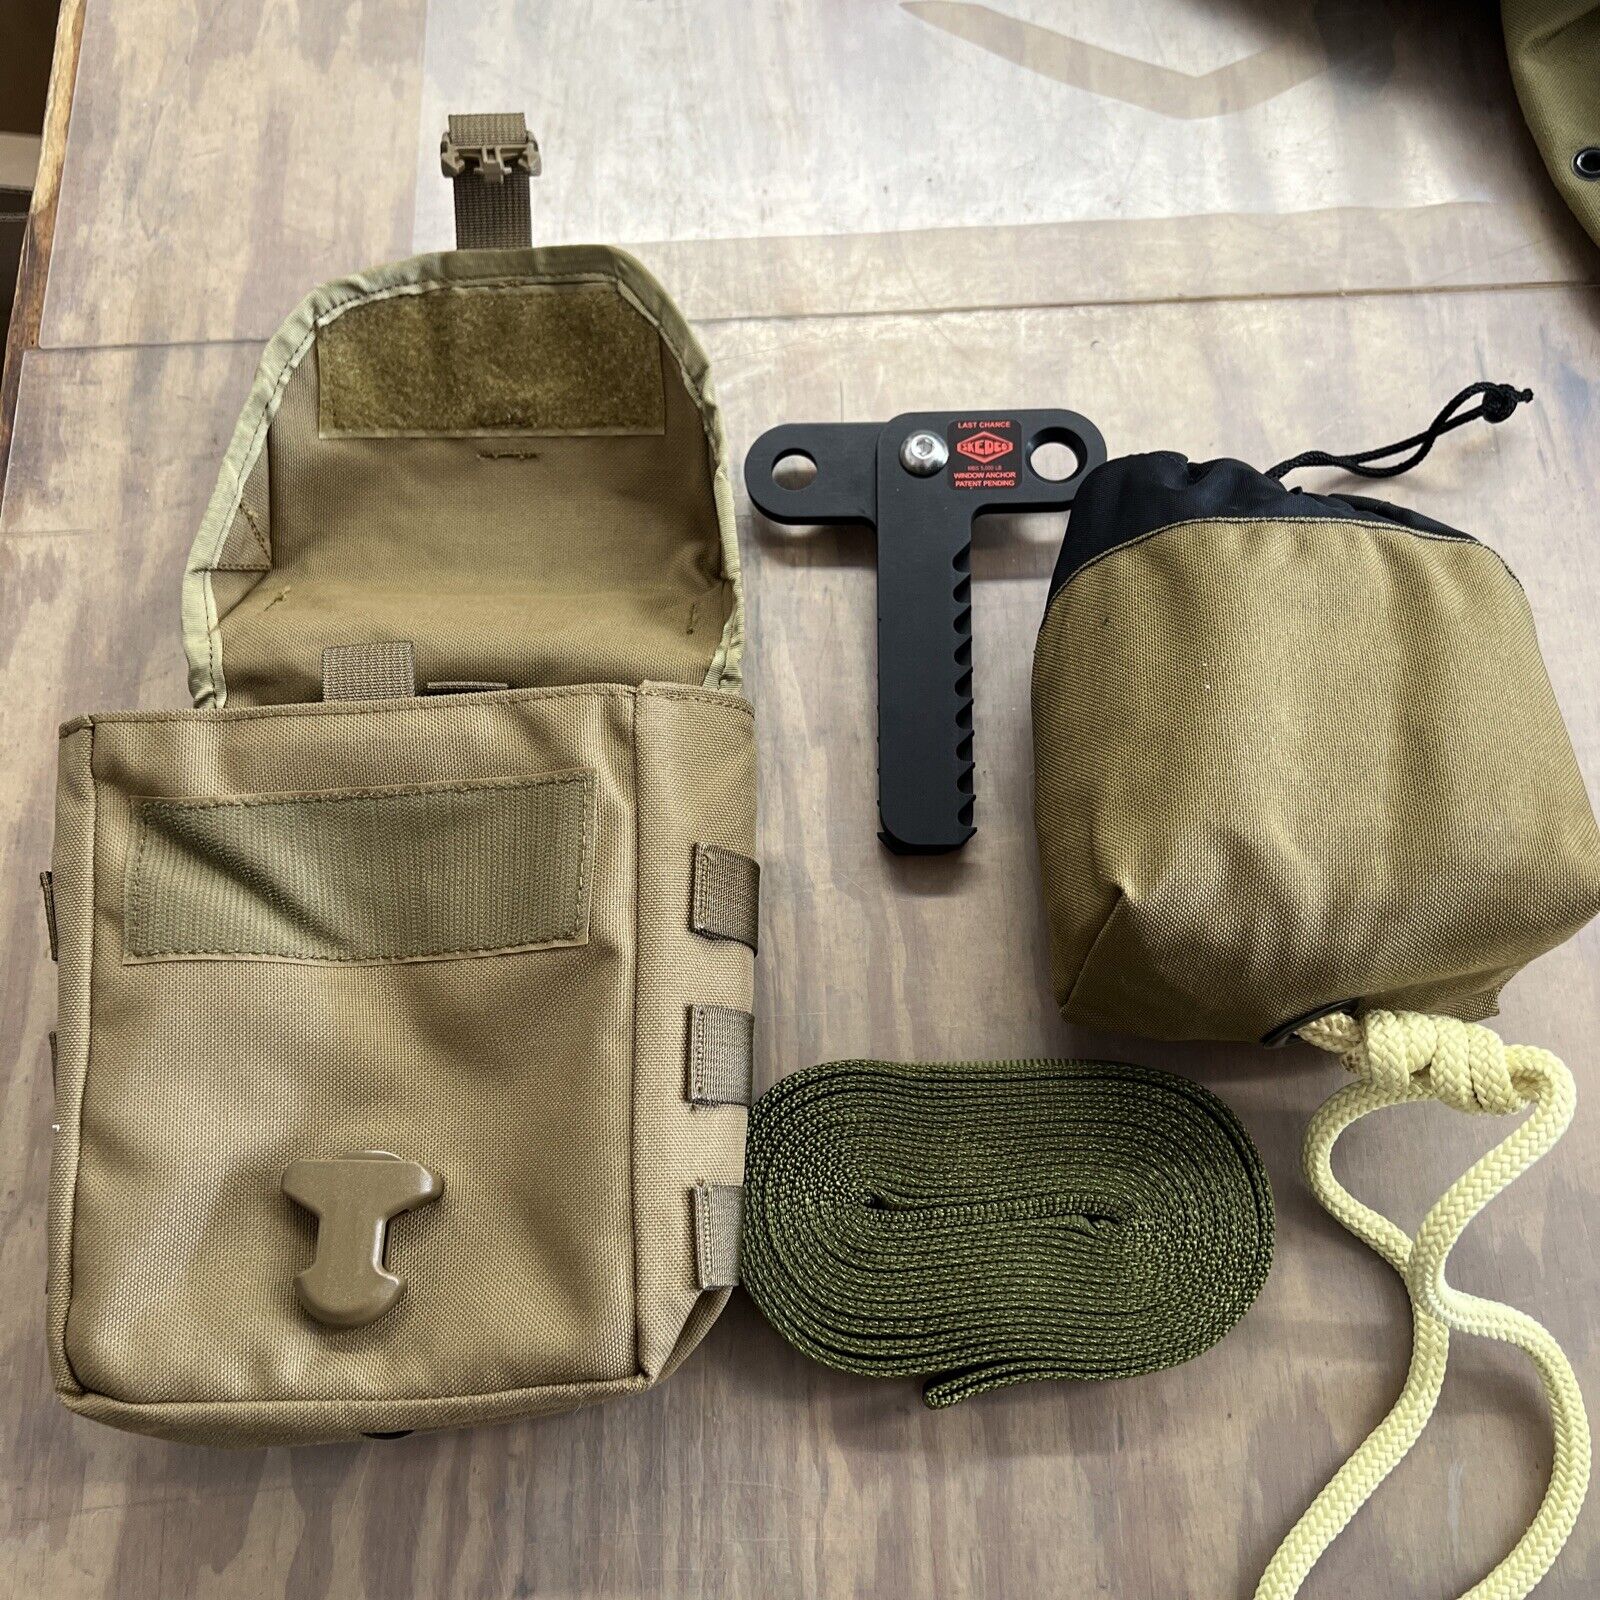 Skedco Individual Self Rescue Kit Cag Sof Devgru Seal